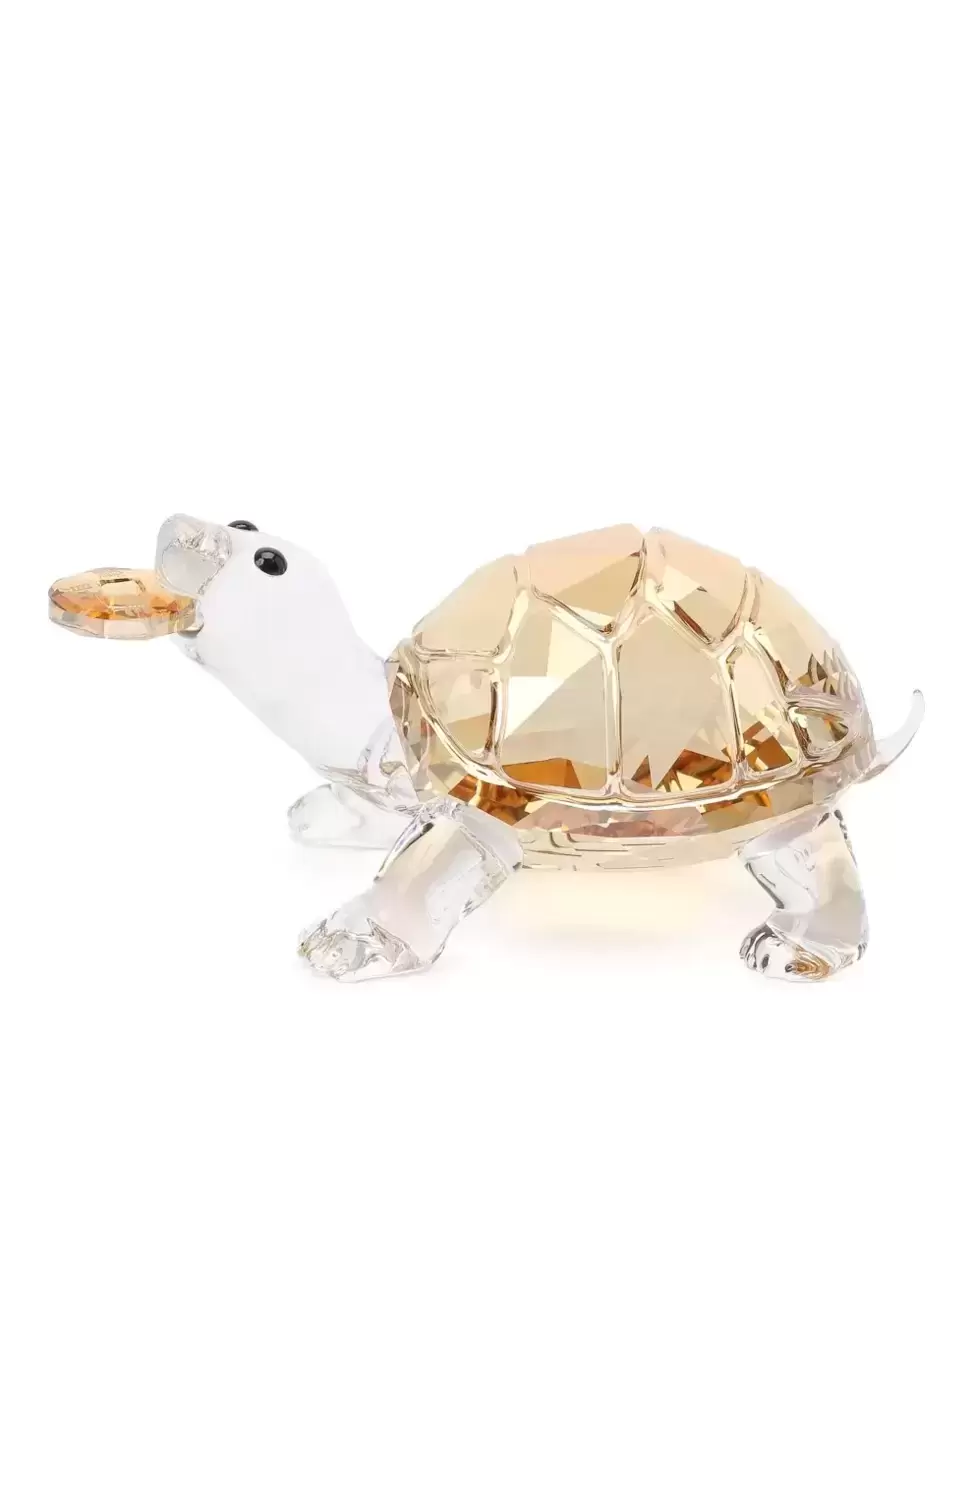 Swarovski Crystal Figures - Asian Turtle